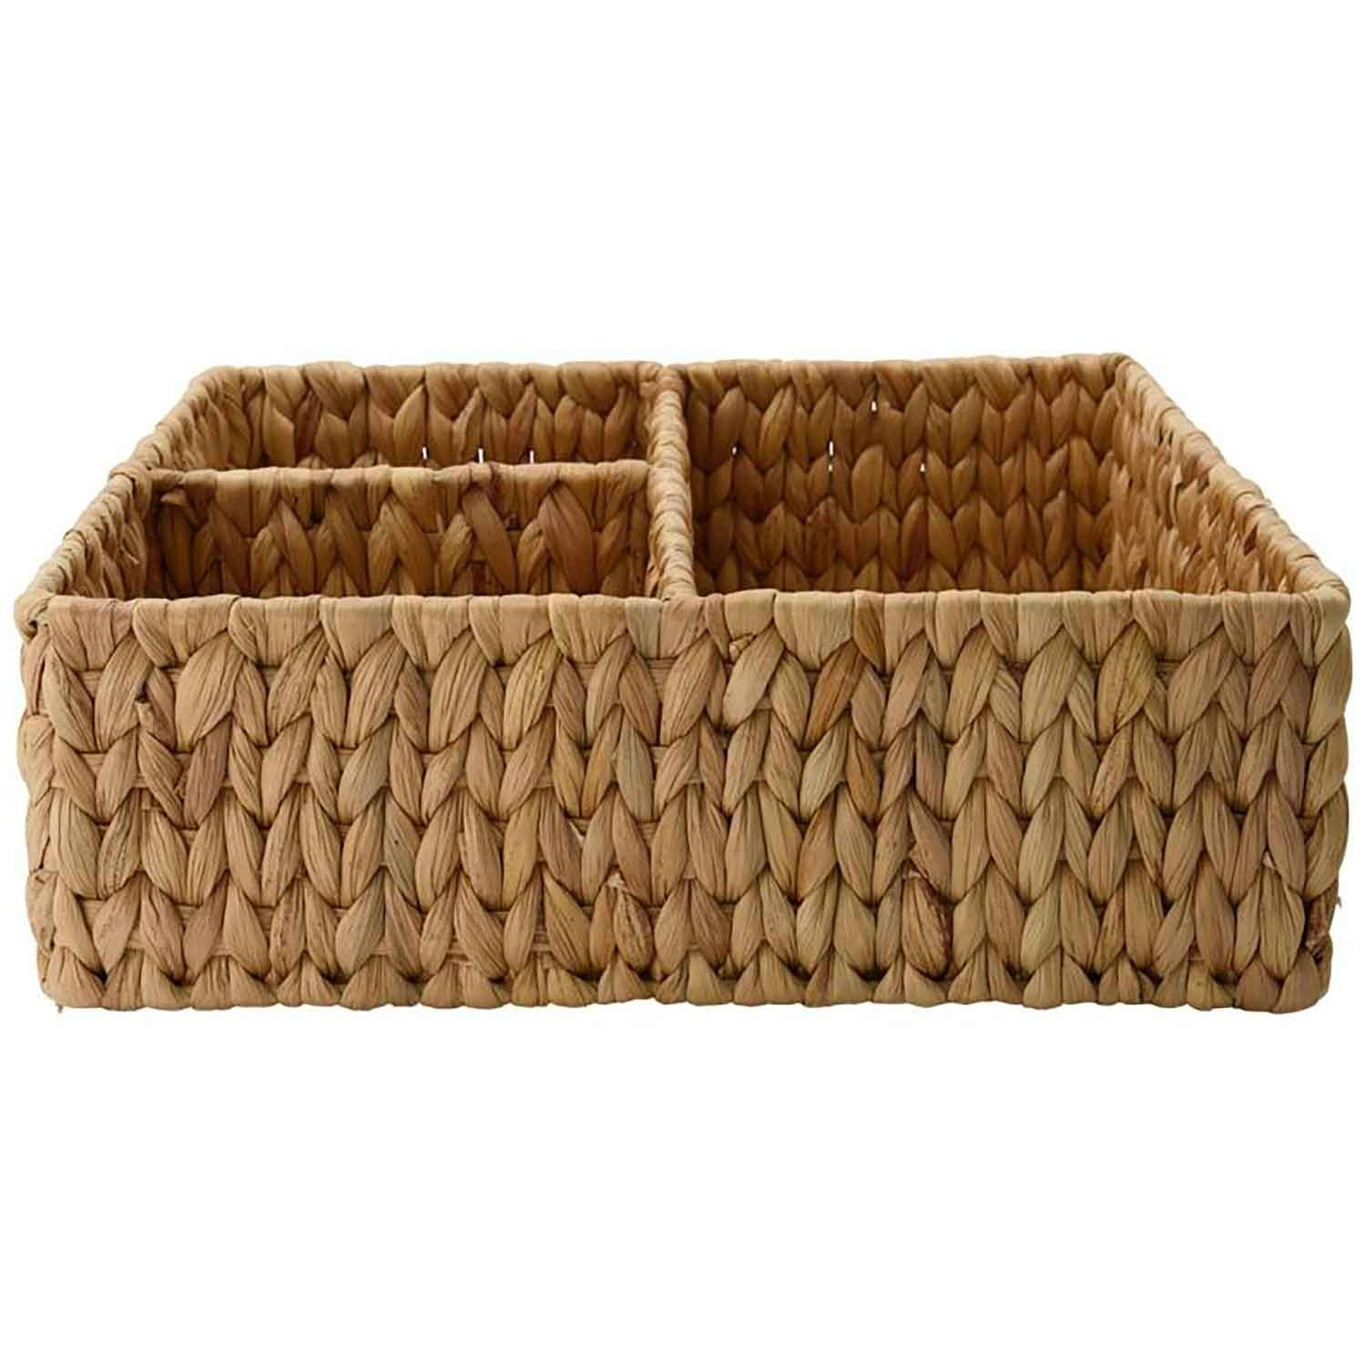 Store Basket, 30x30 cm